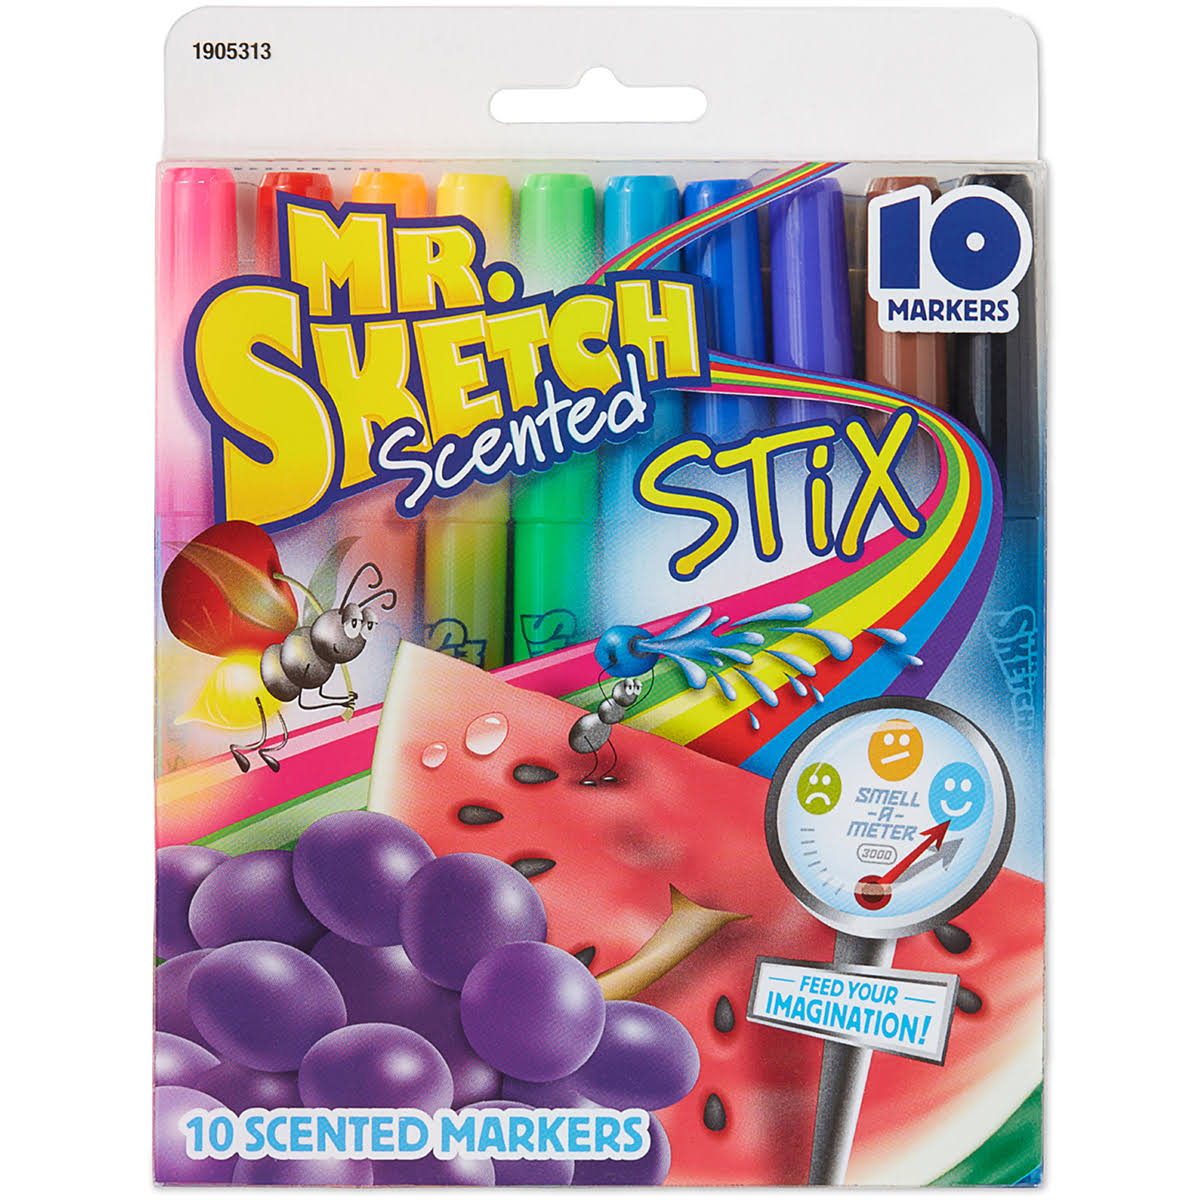 Mr Sketch Scented Stix Watercolor Marker Set - 10 count